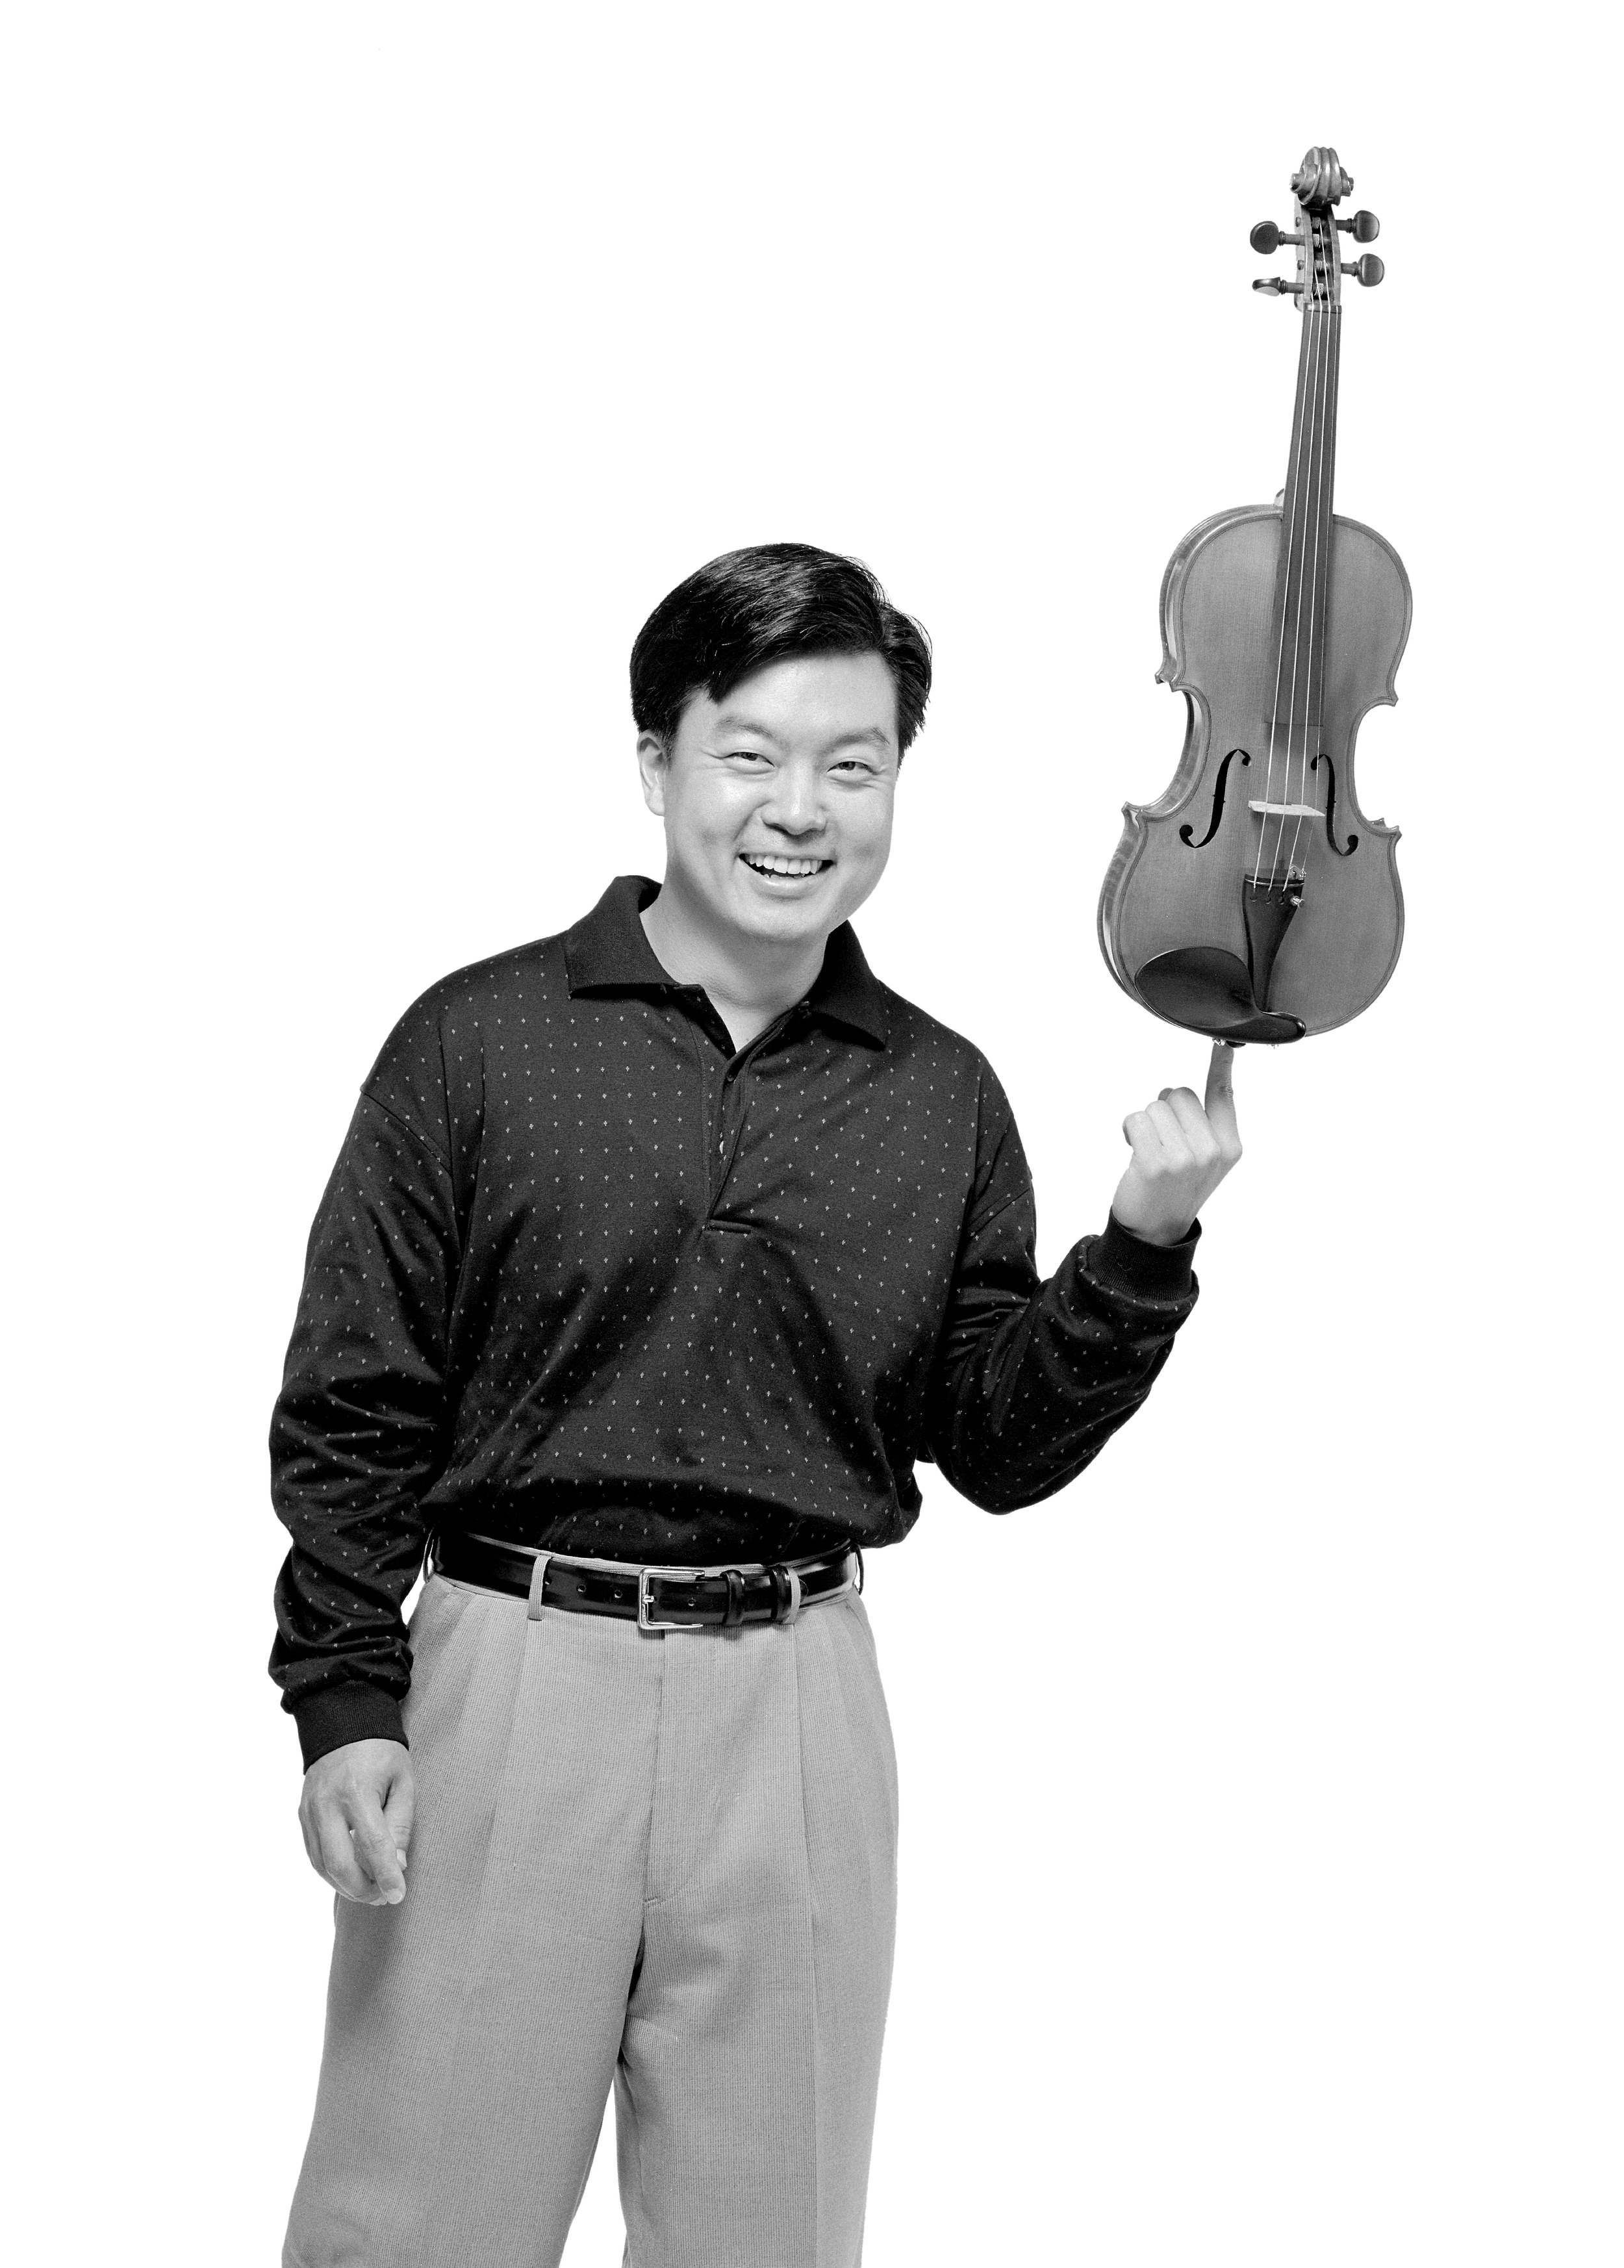 David Park Violin Photo Higher Res.jpg